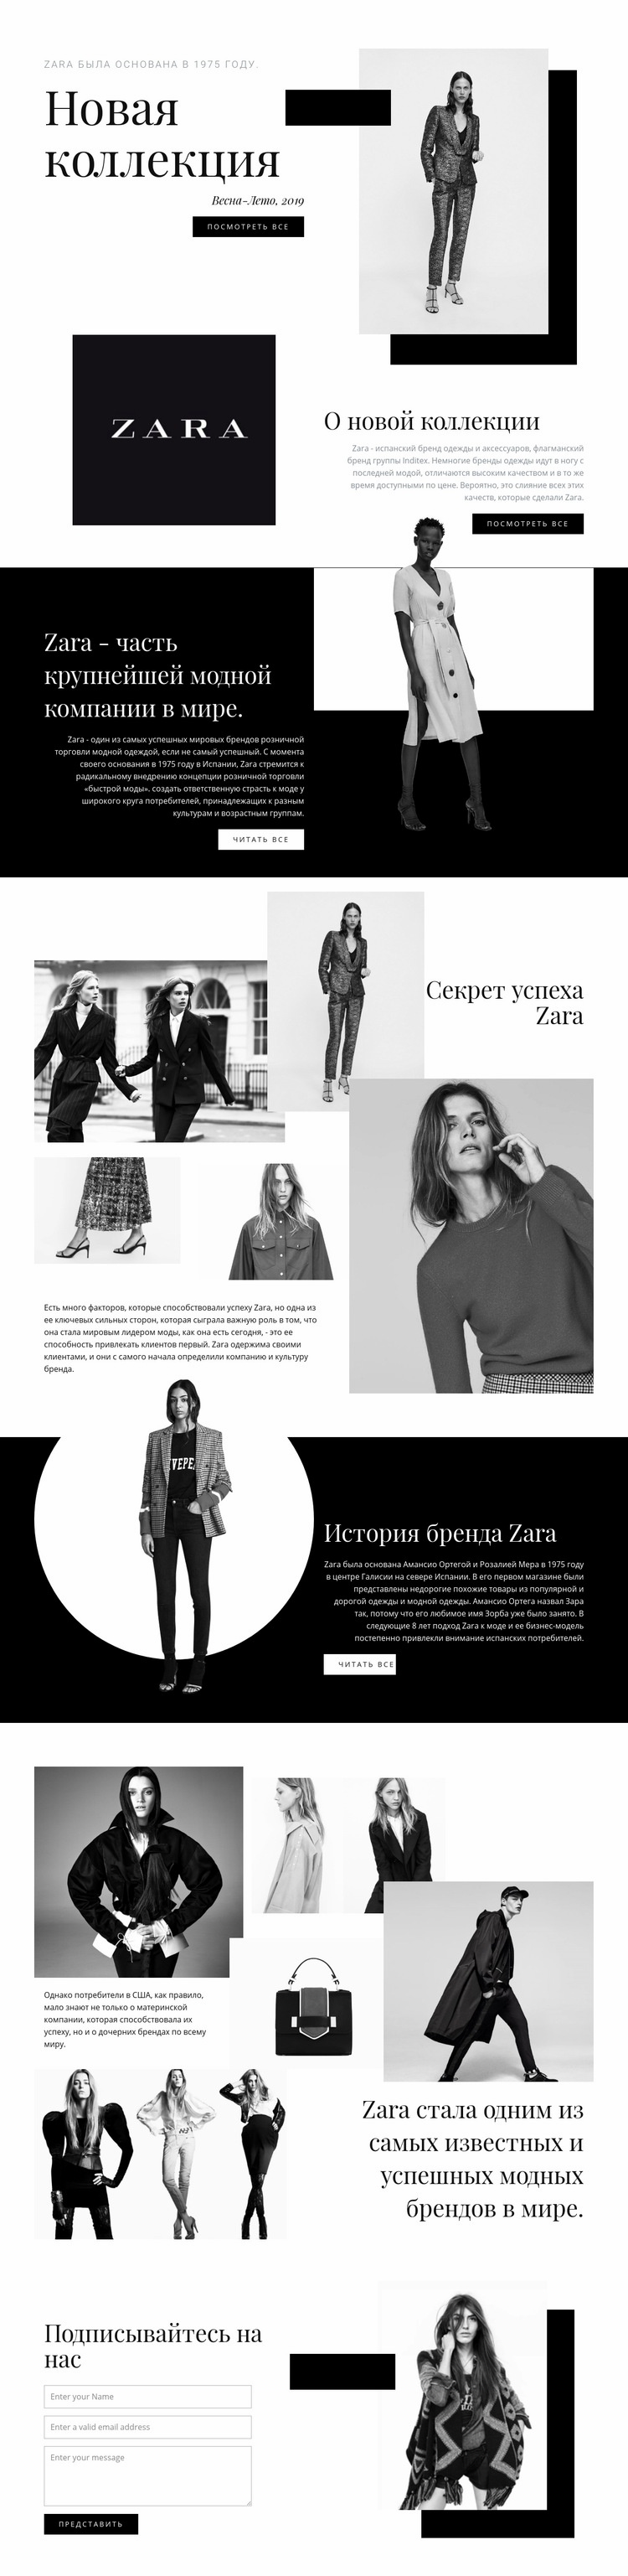 Коллекция Zara Целевая страница